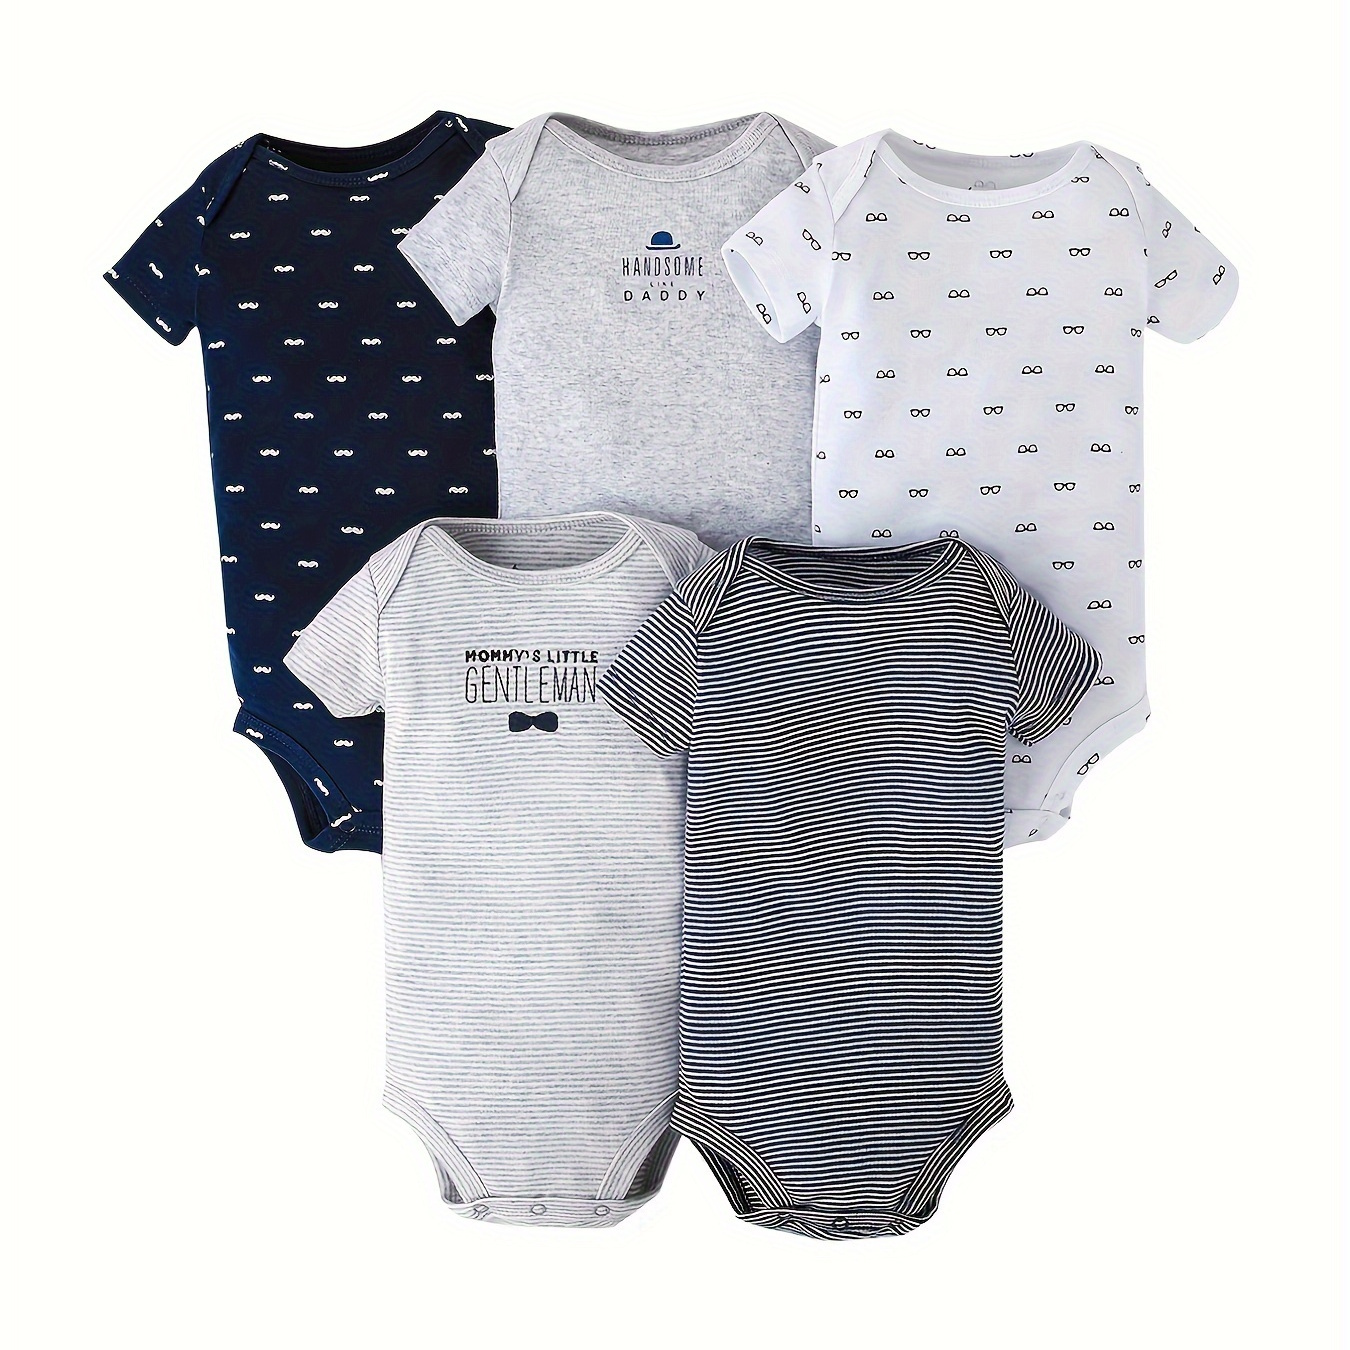 

5pcs Infant's 100% Cotton Gentleman Themed Bodysuit, Comfy Short Sleeve Onesie, Baby Boy's Clothing